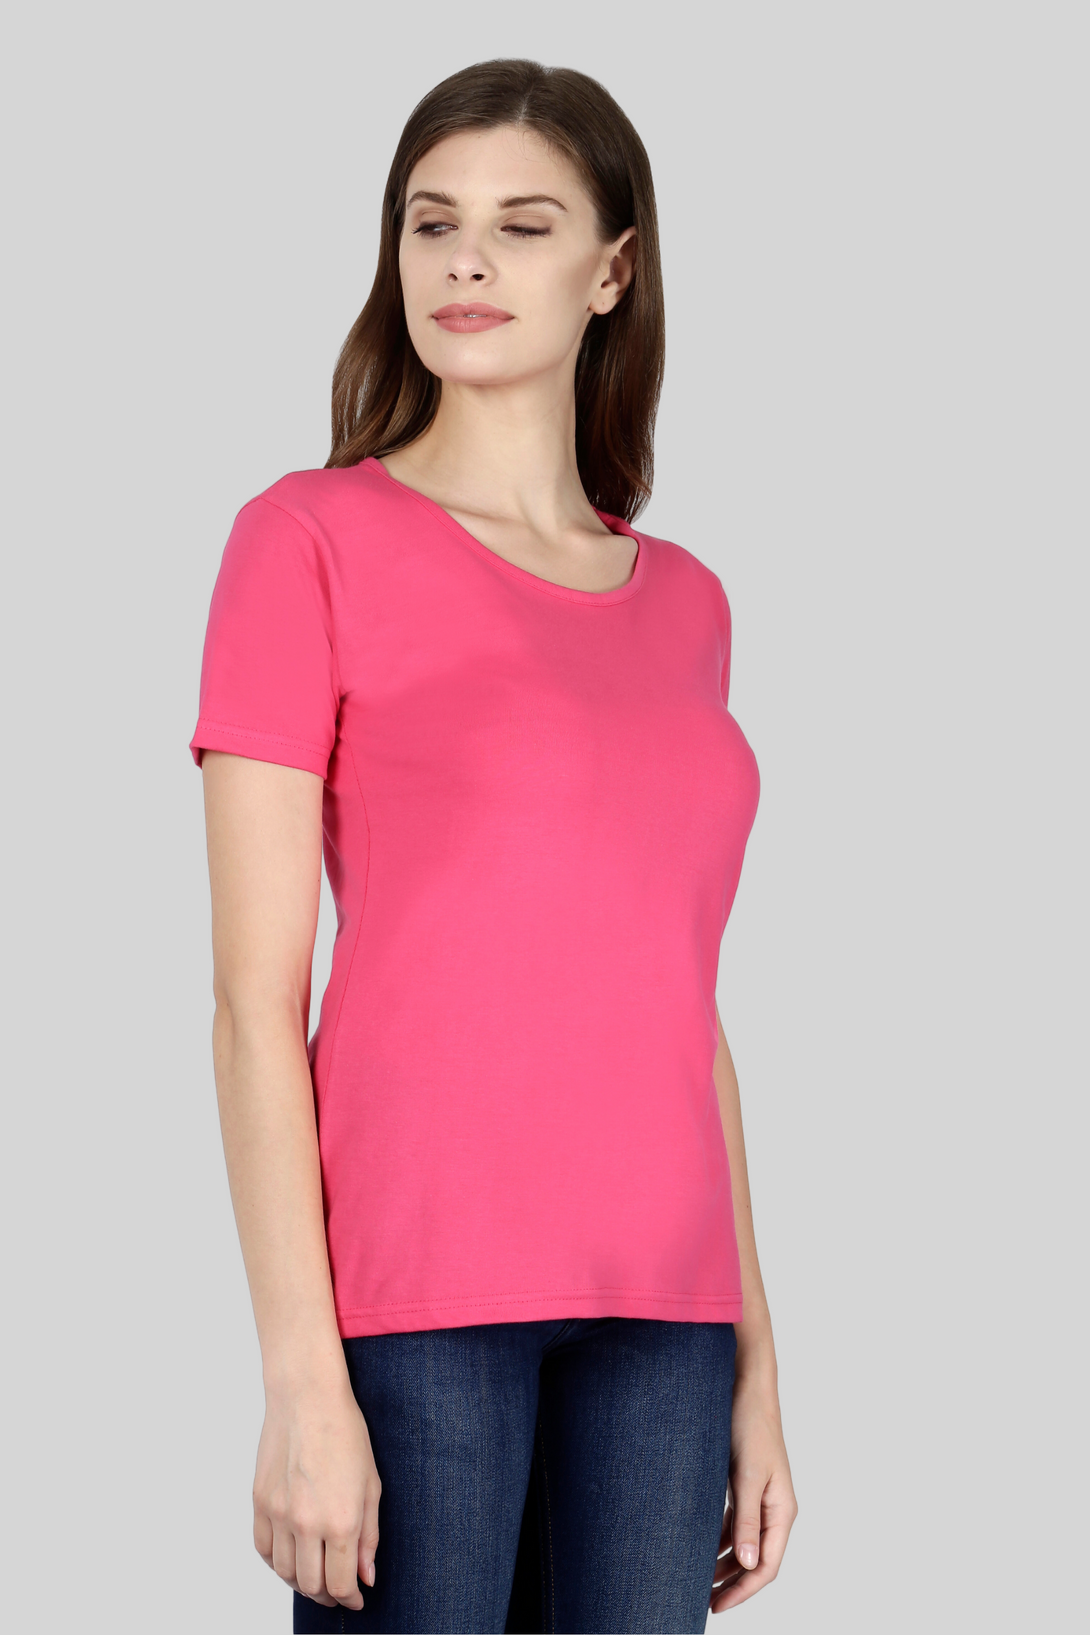 Pink Scoop Neck T-Shirt For Women - WowWaves - 2